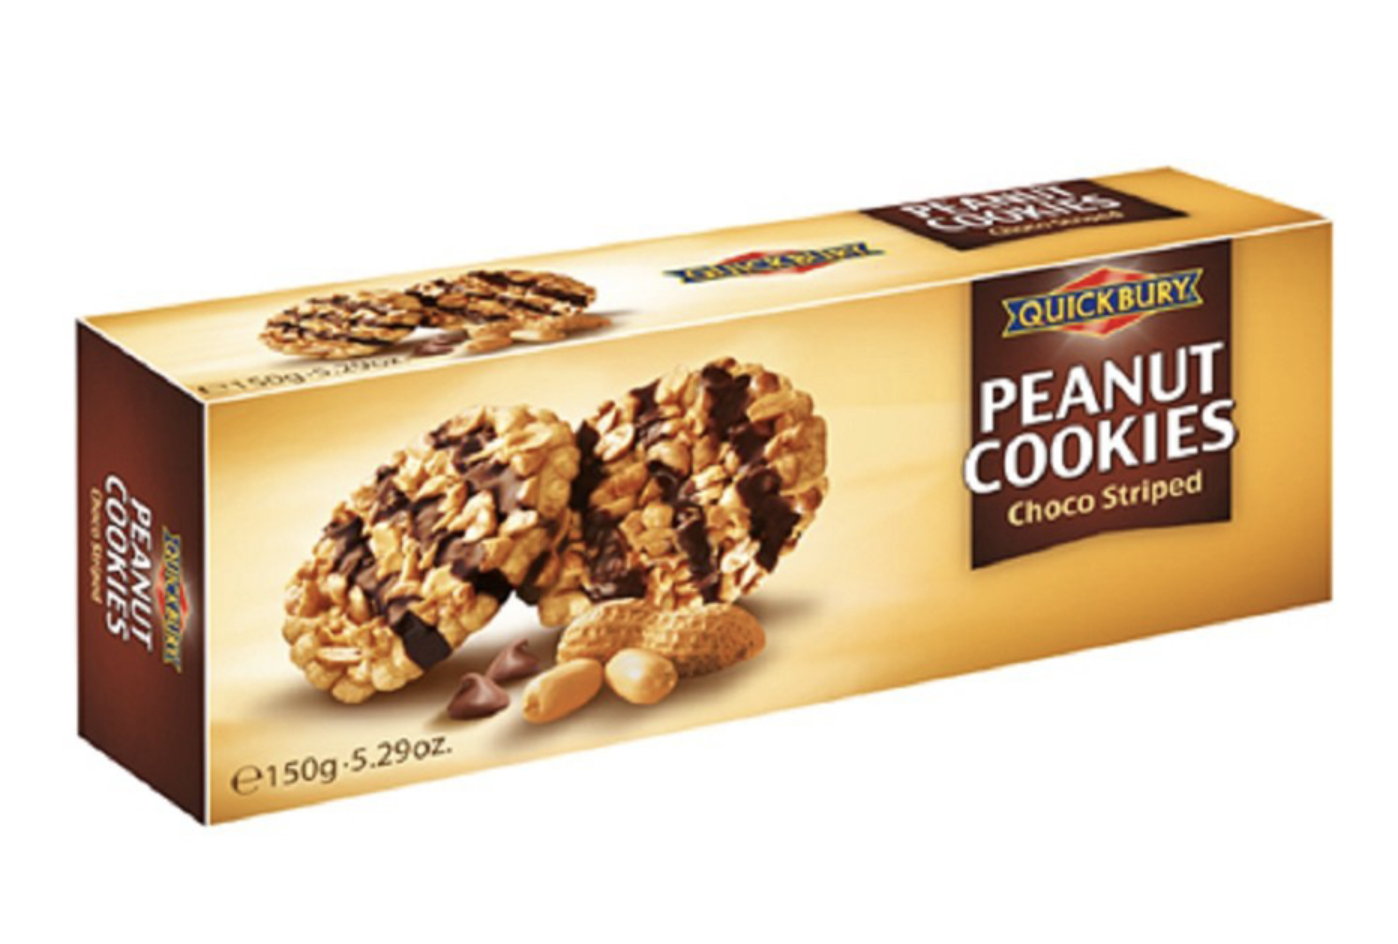 Cookies отзывы. Печенье Quickbury Peanut cookies с арахисом. Печенье с арахисом и шоколадом. Печенье с шоколадными полосками. Печенье в арахисовой глазури.